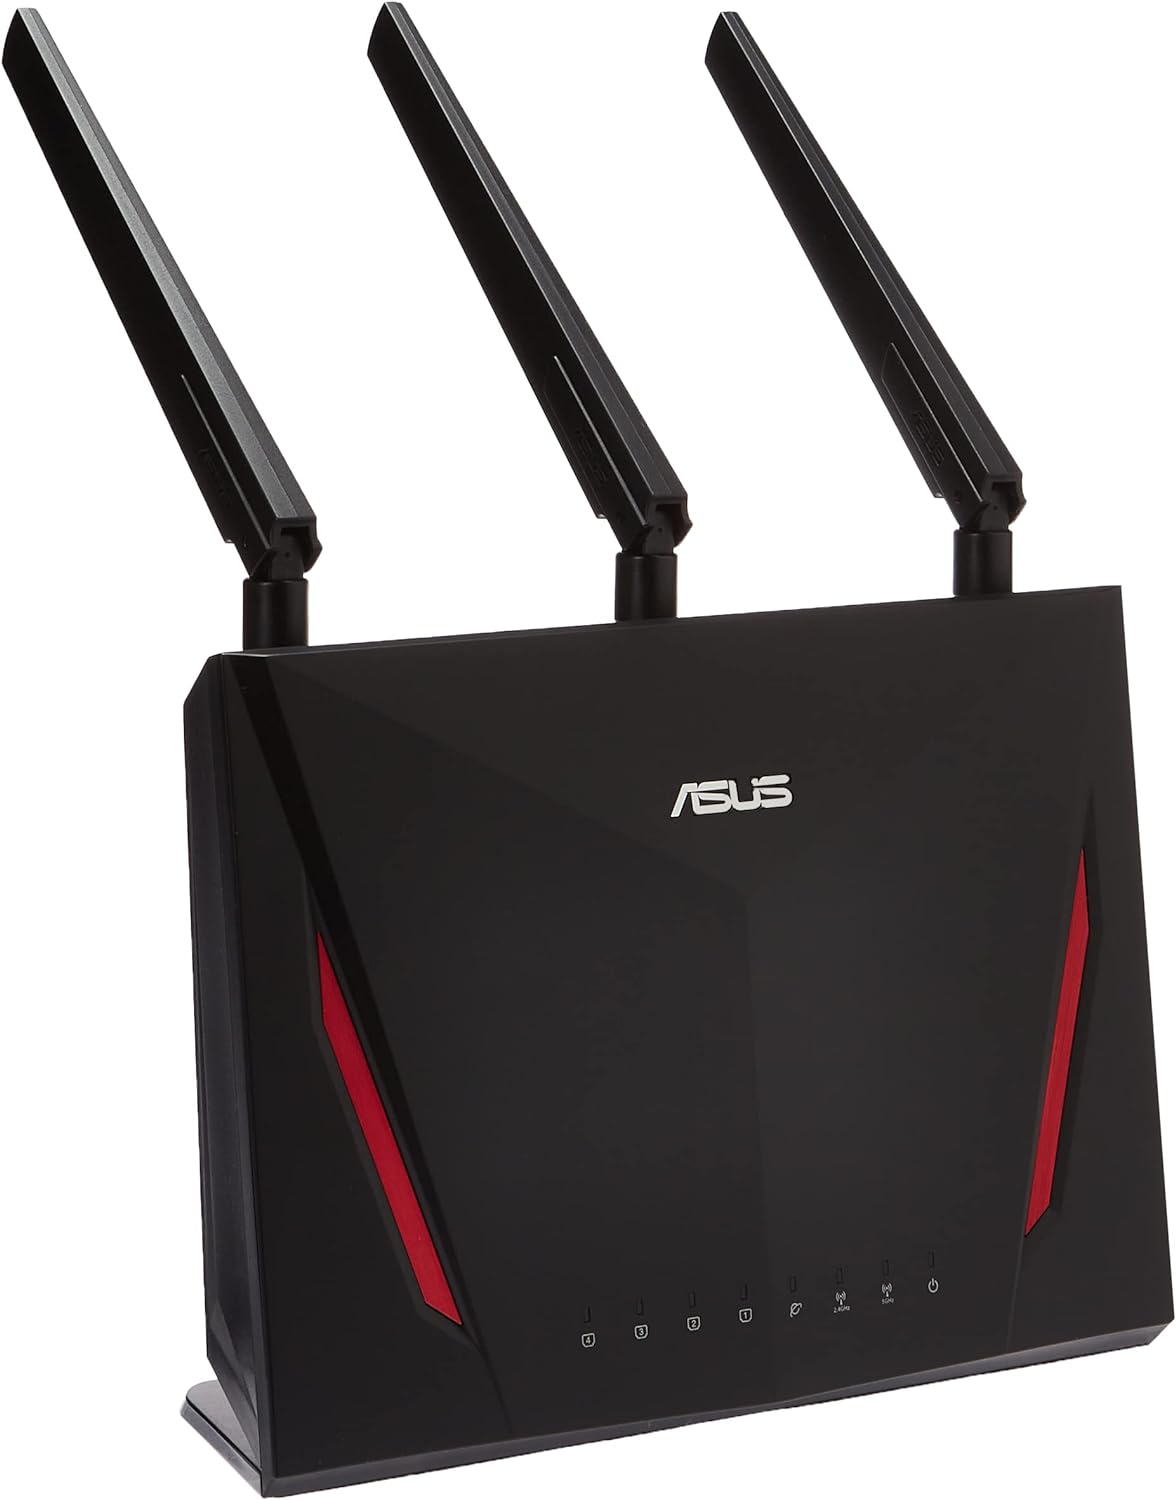 ASUS RT-AC86U AC2900 Dual Band Gigabit WiFi Gaming Router - Black 4716659214199E